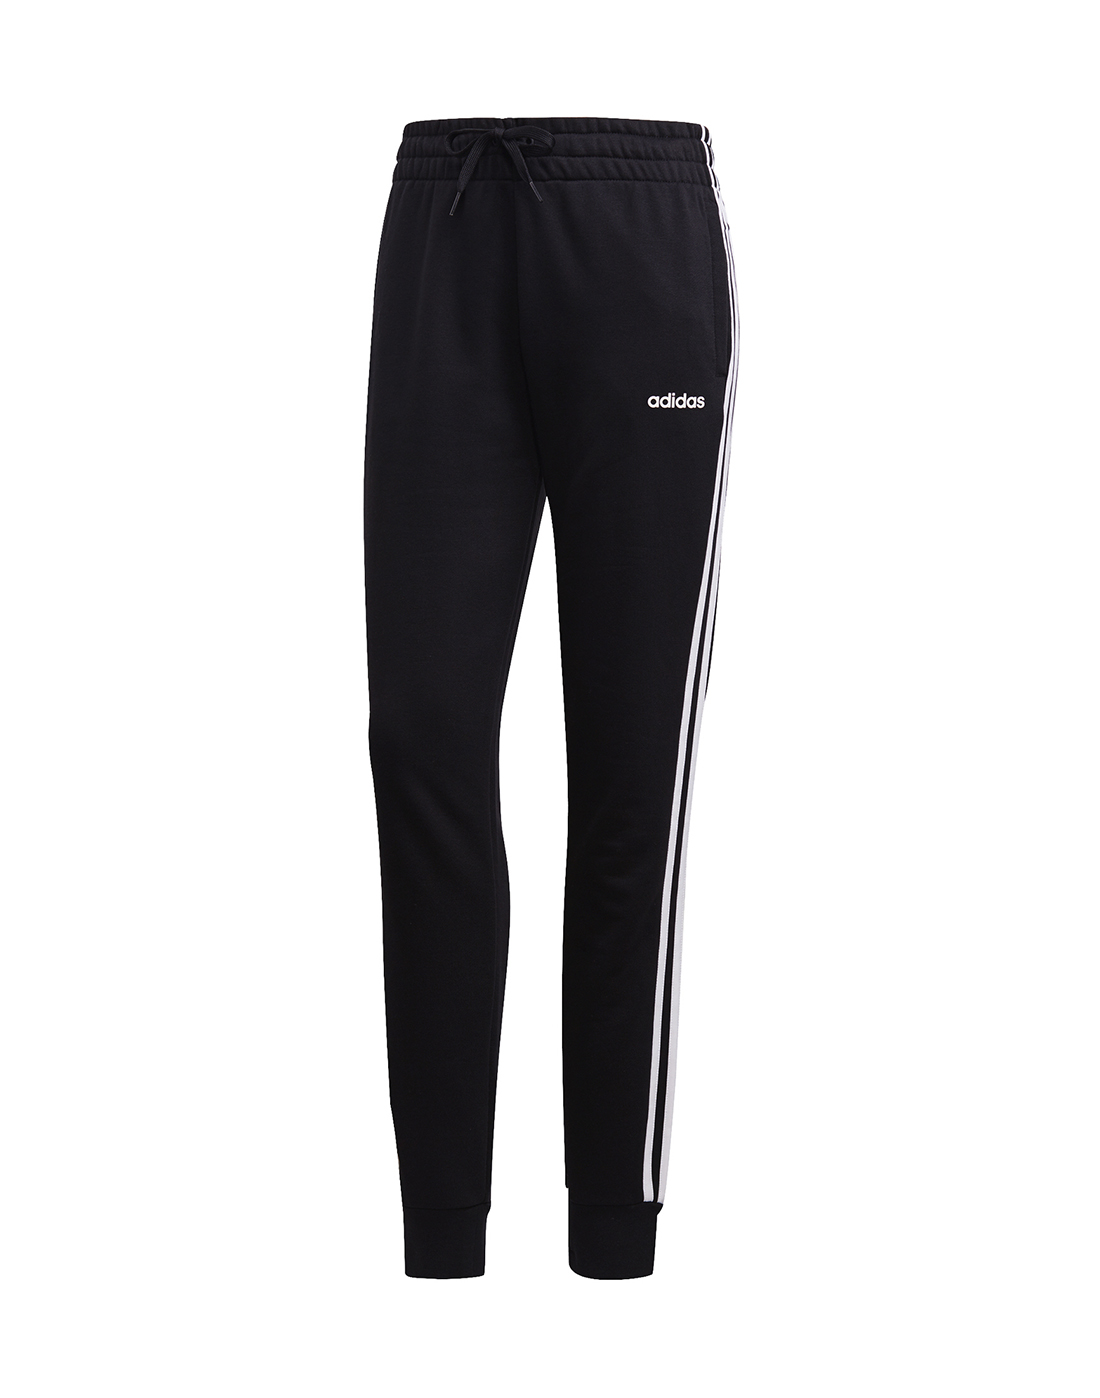 Women's Black adidas 3-Stripes Pants 